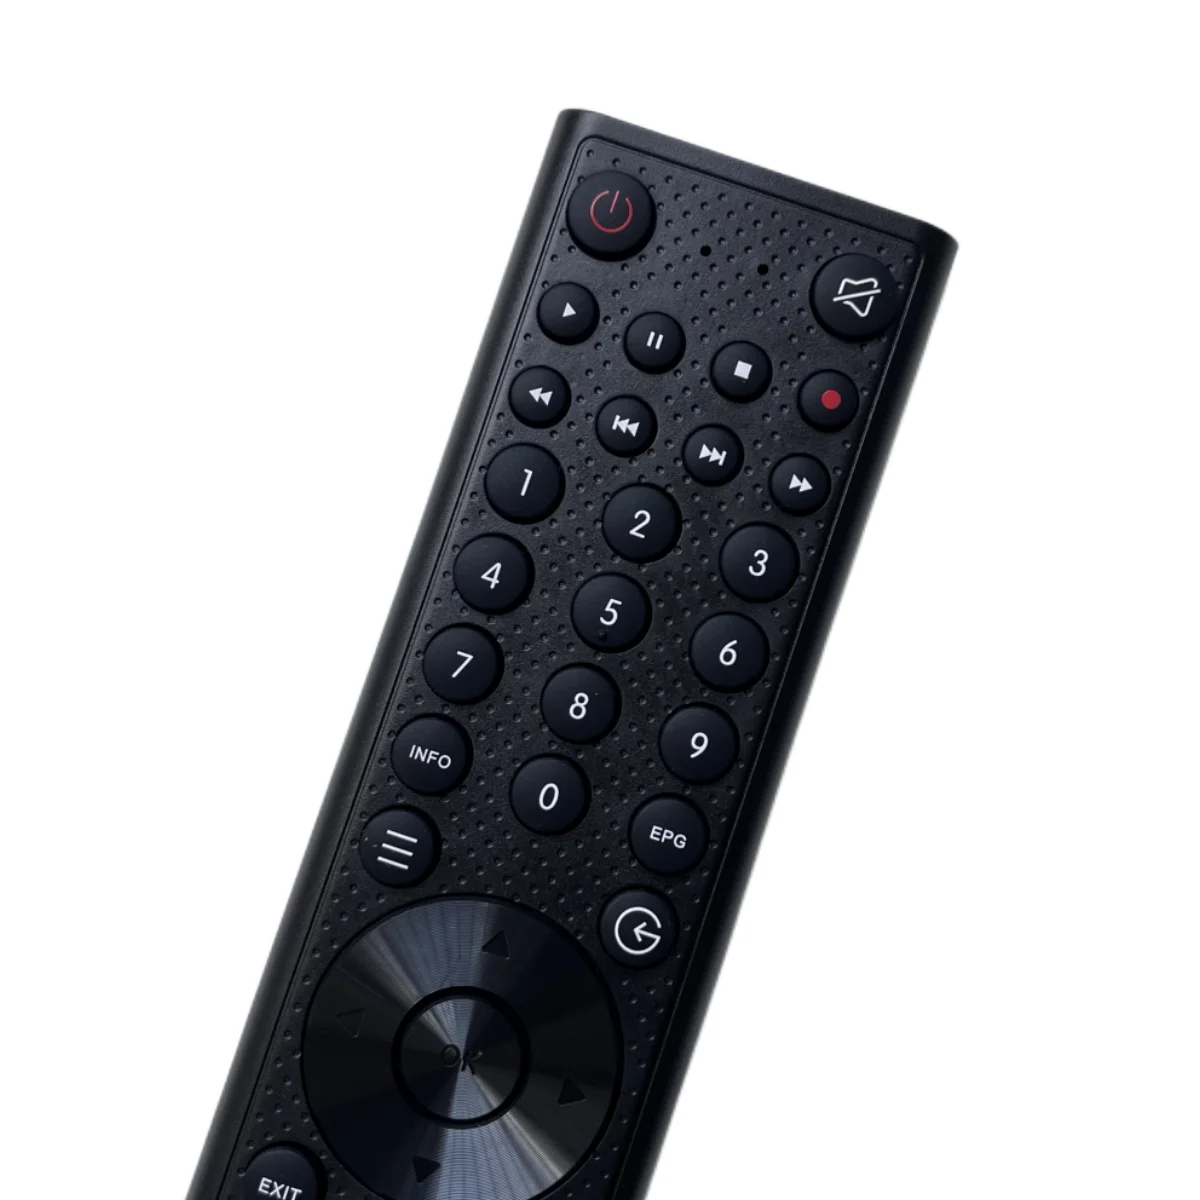 Mando a distancia para TD SYSTEMS, CONTROL remoto para SMART TV - AliExpress